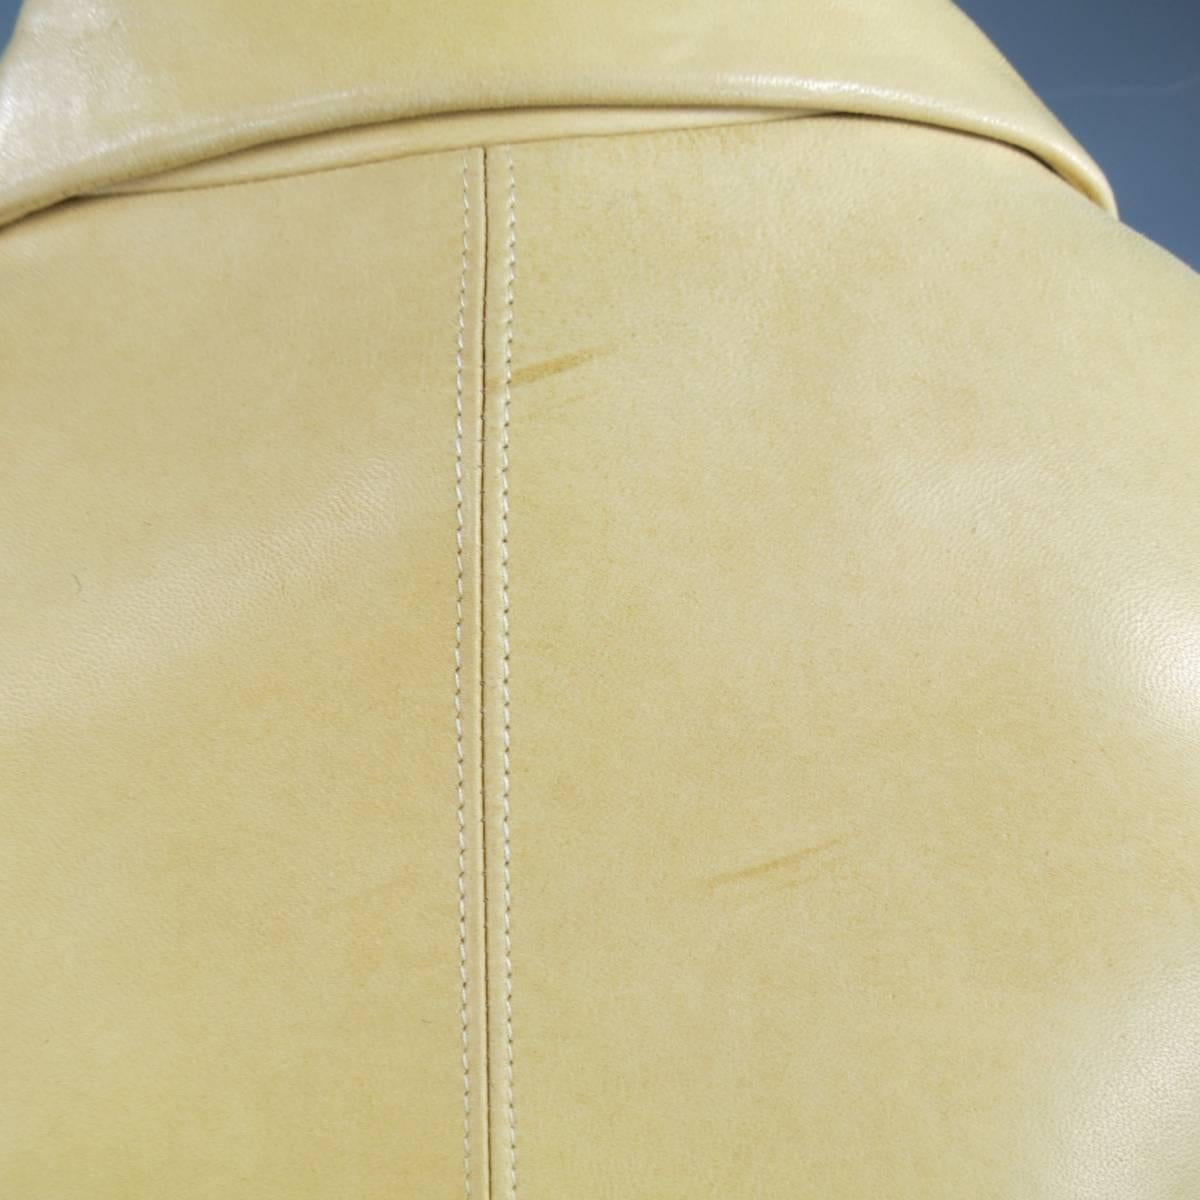 OSCAR DE LA RENTA Size S Beige Leather Collared Vest Top 1